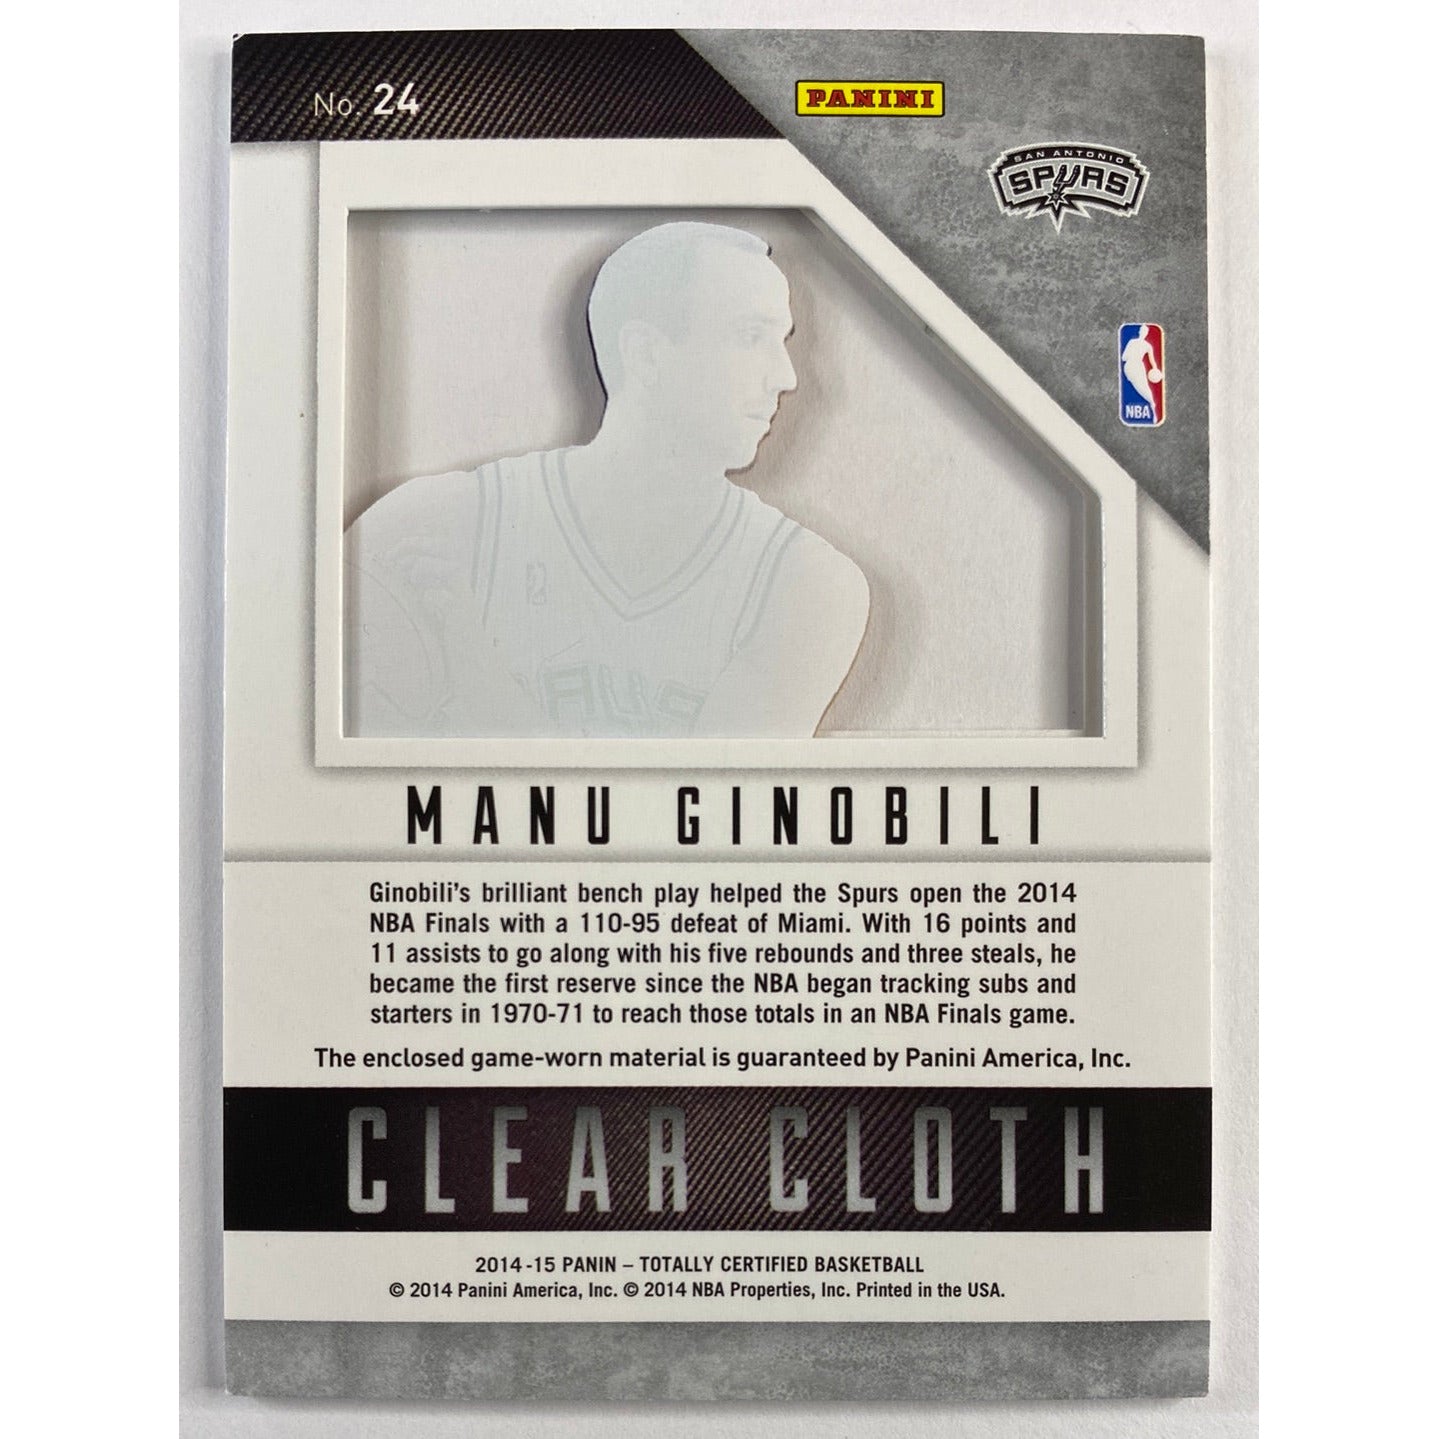 2014-15 Totally Certified Manu Ginobili Clear Cloth /299